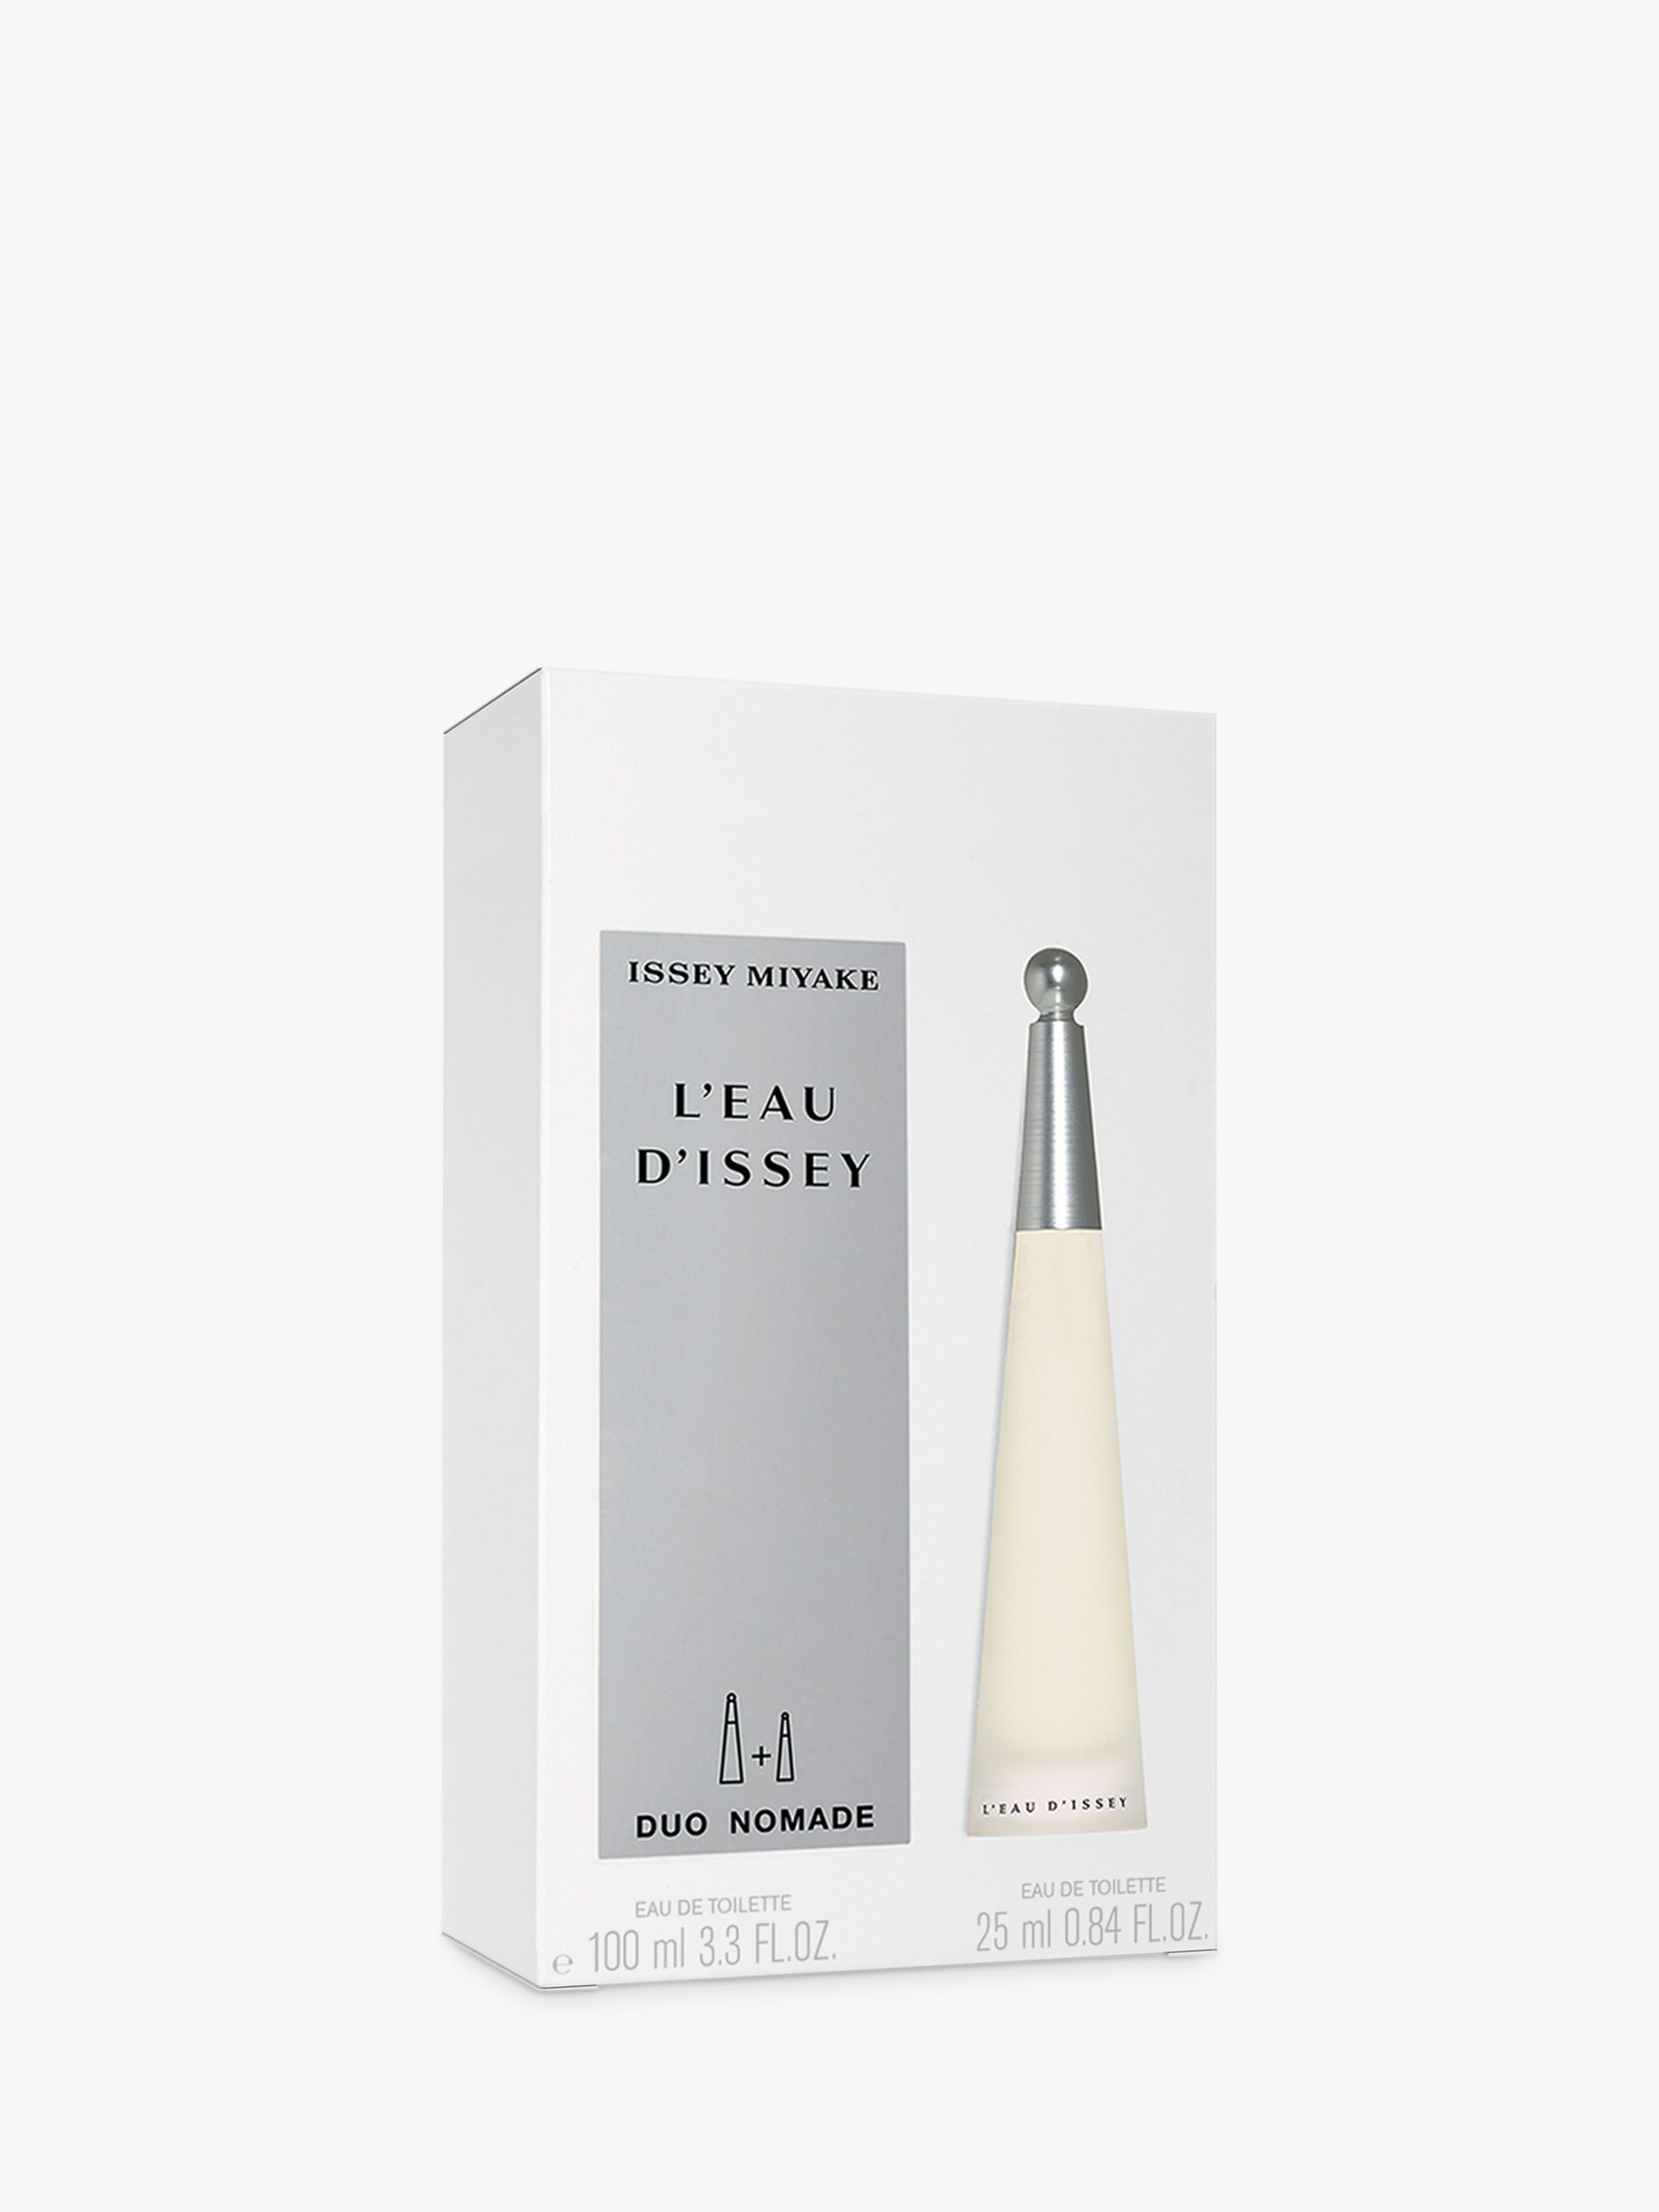 Issey Miyake L'Eau d'Issey Eau de Toilette Natural Spray 100ml Fragrance Gift Set 2